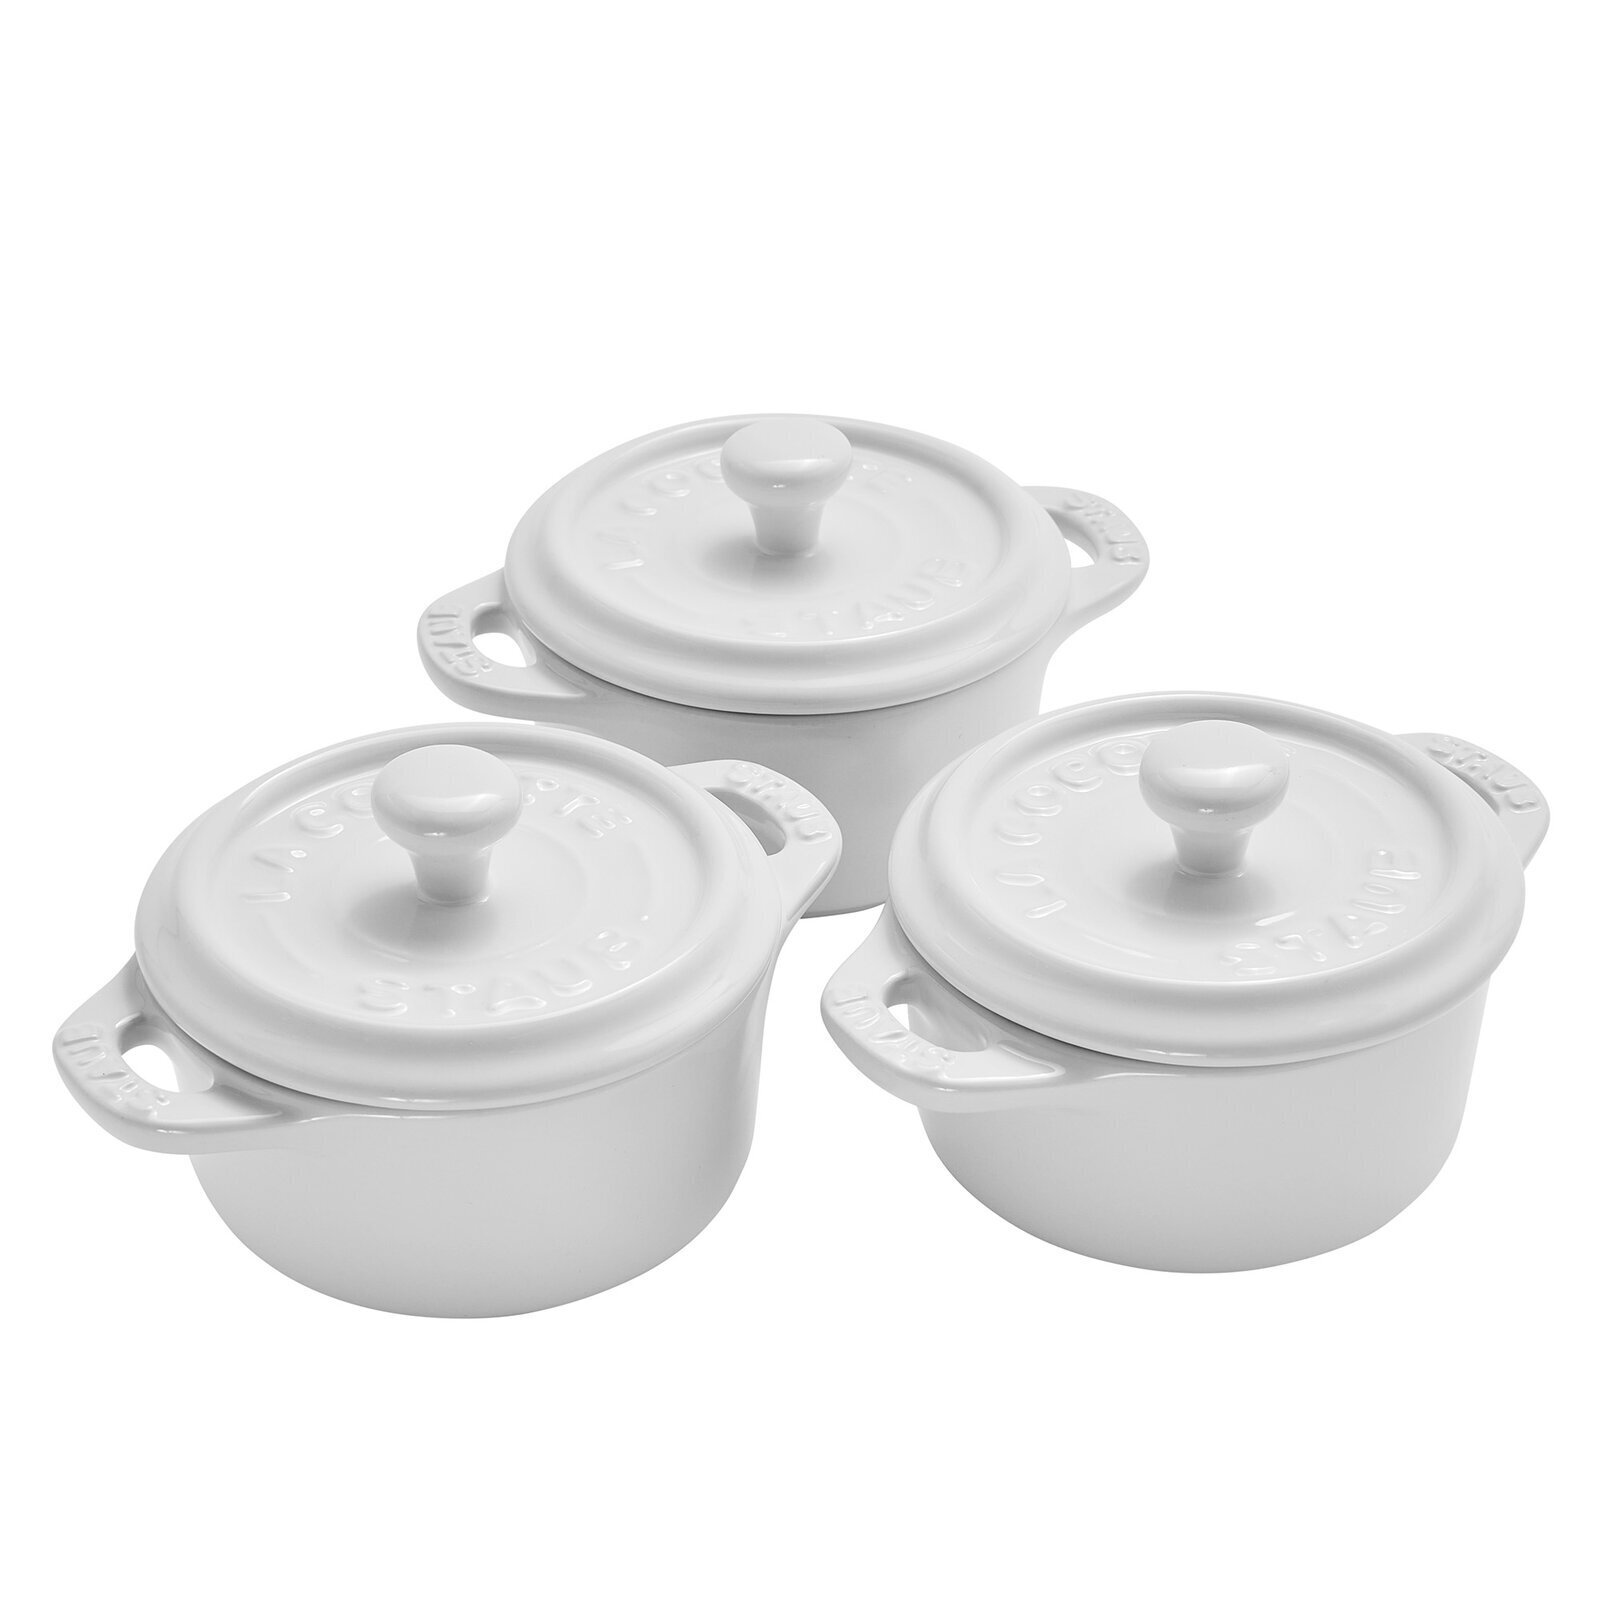 3 piece White Enamel Cookware Set